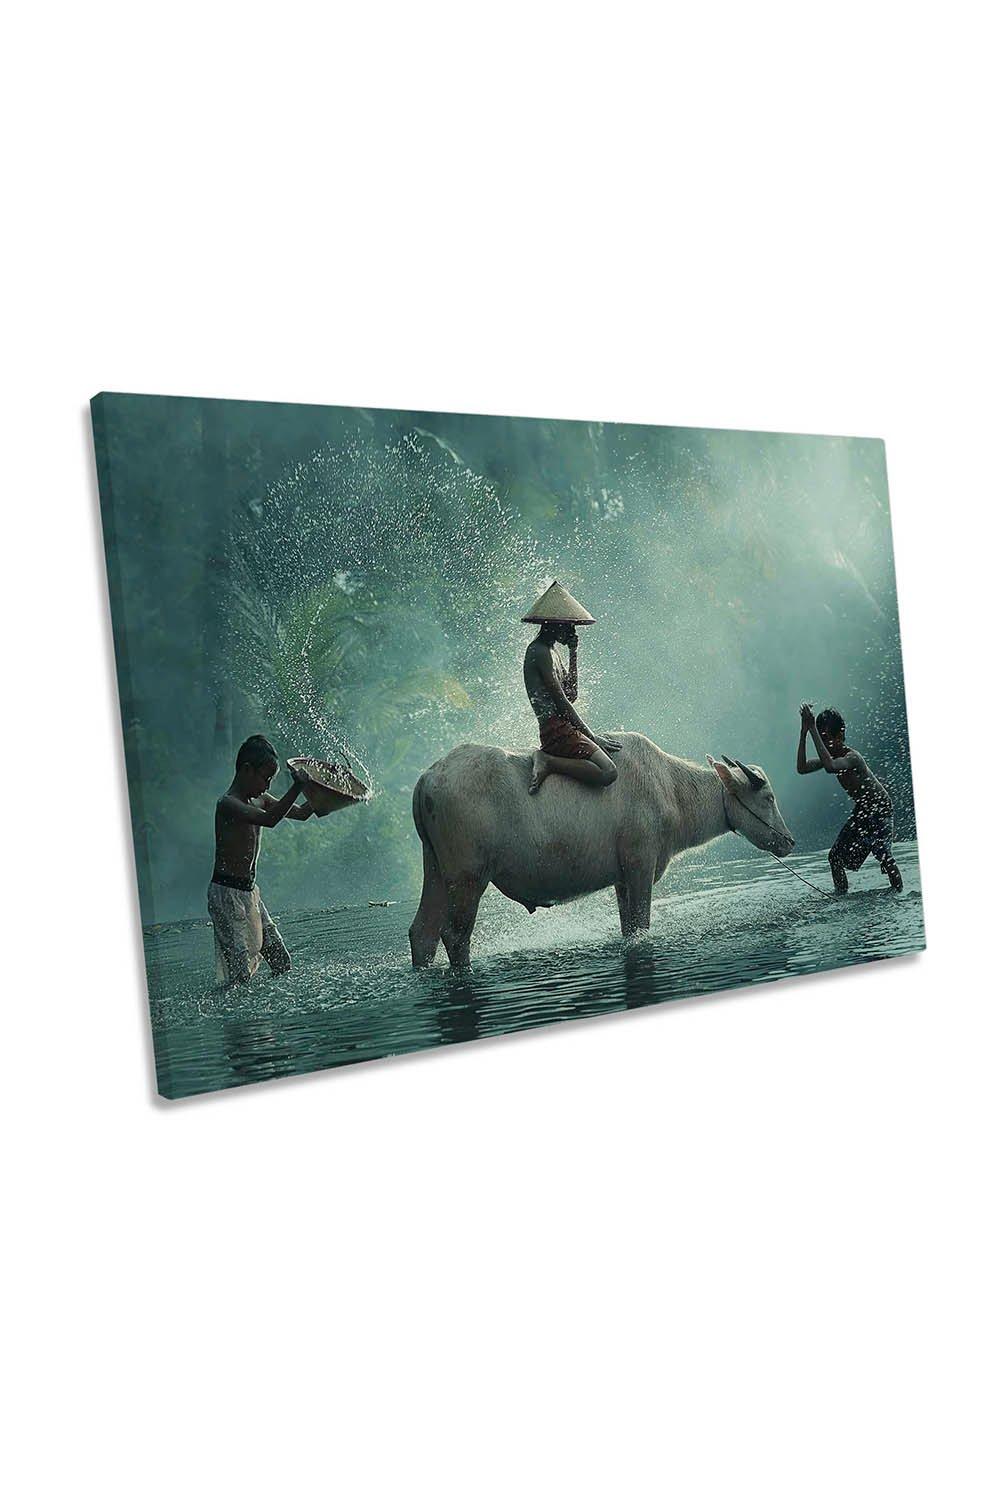 Water Buffalo Water Splash Canvas Wall Art Picture Print